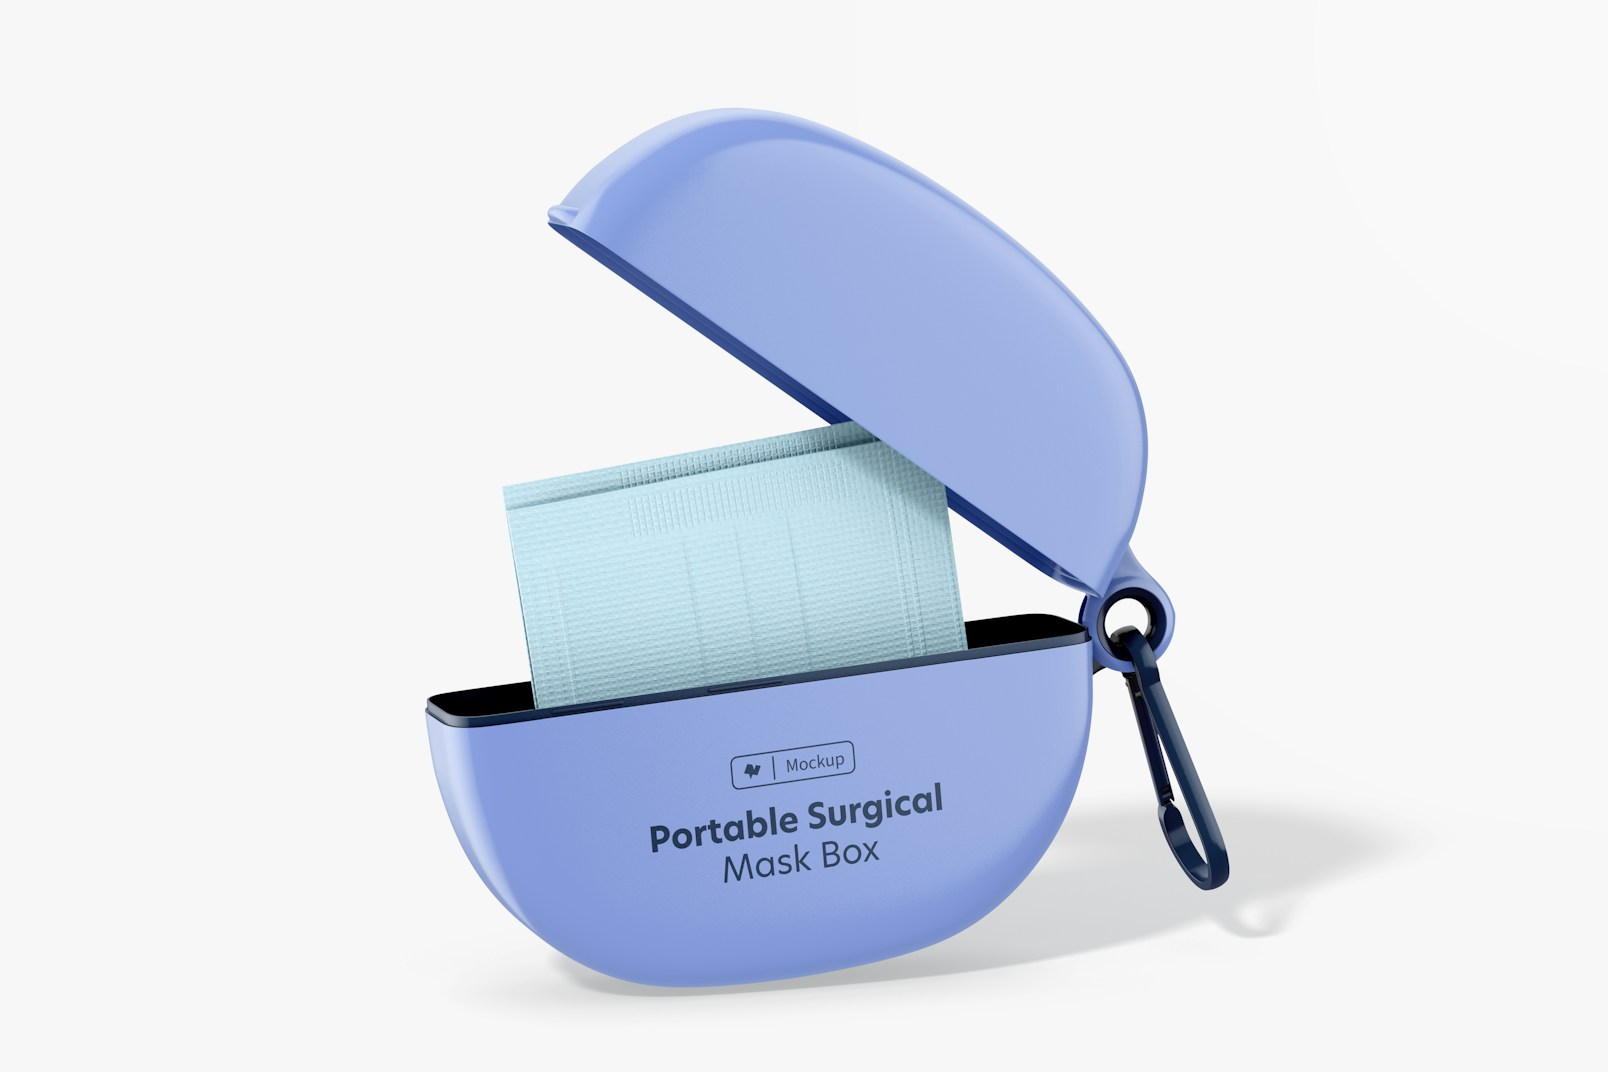 Portable Surgical Mask Box Mockup, Opened